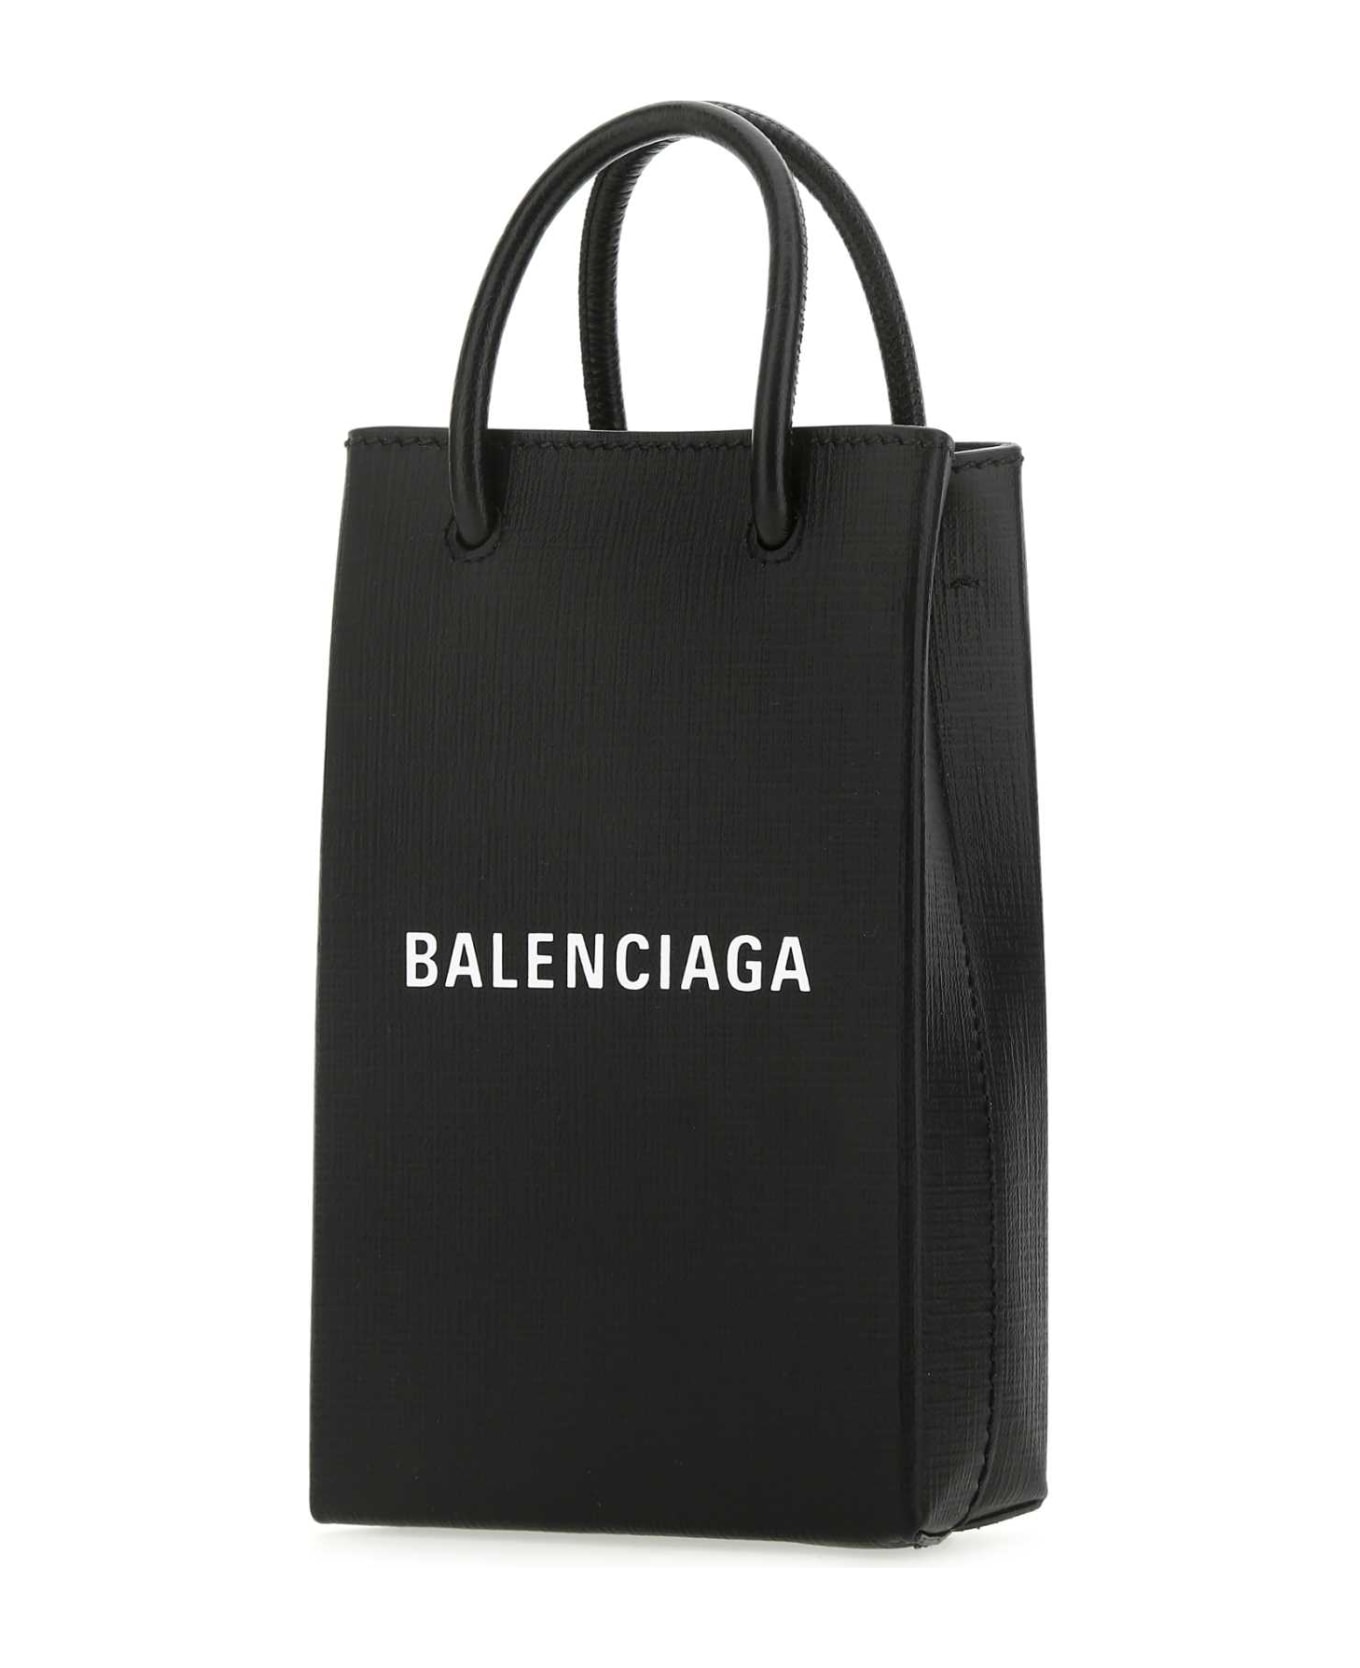 Balenciaga Black Leather Phone Case - 1000